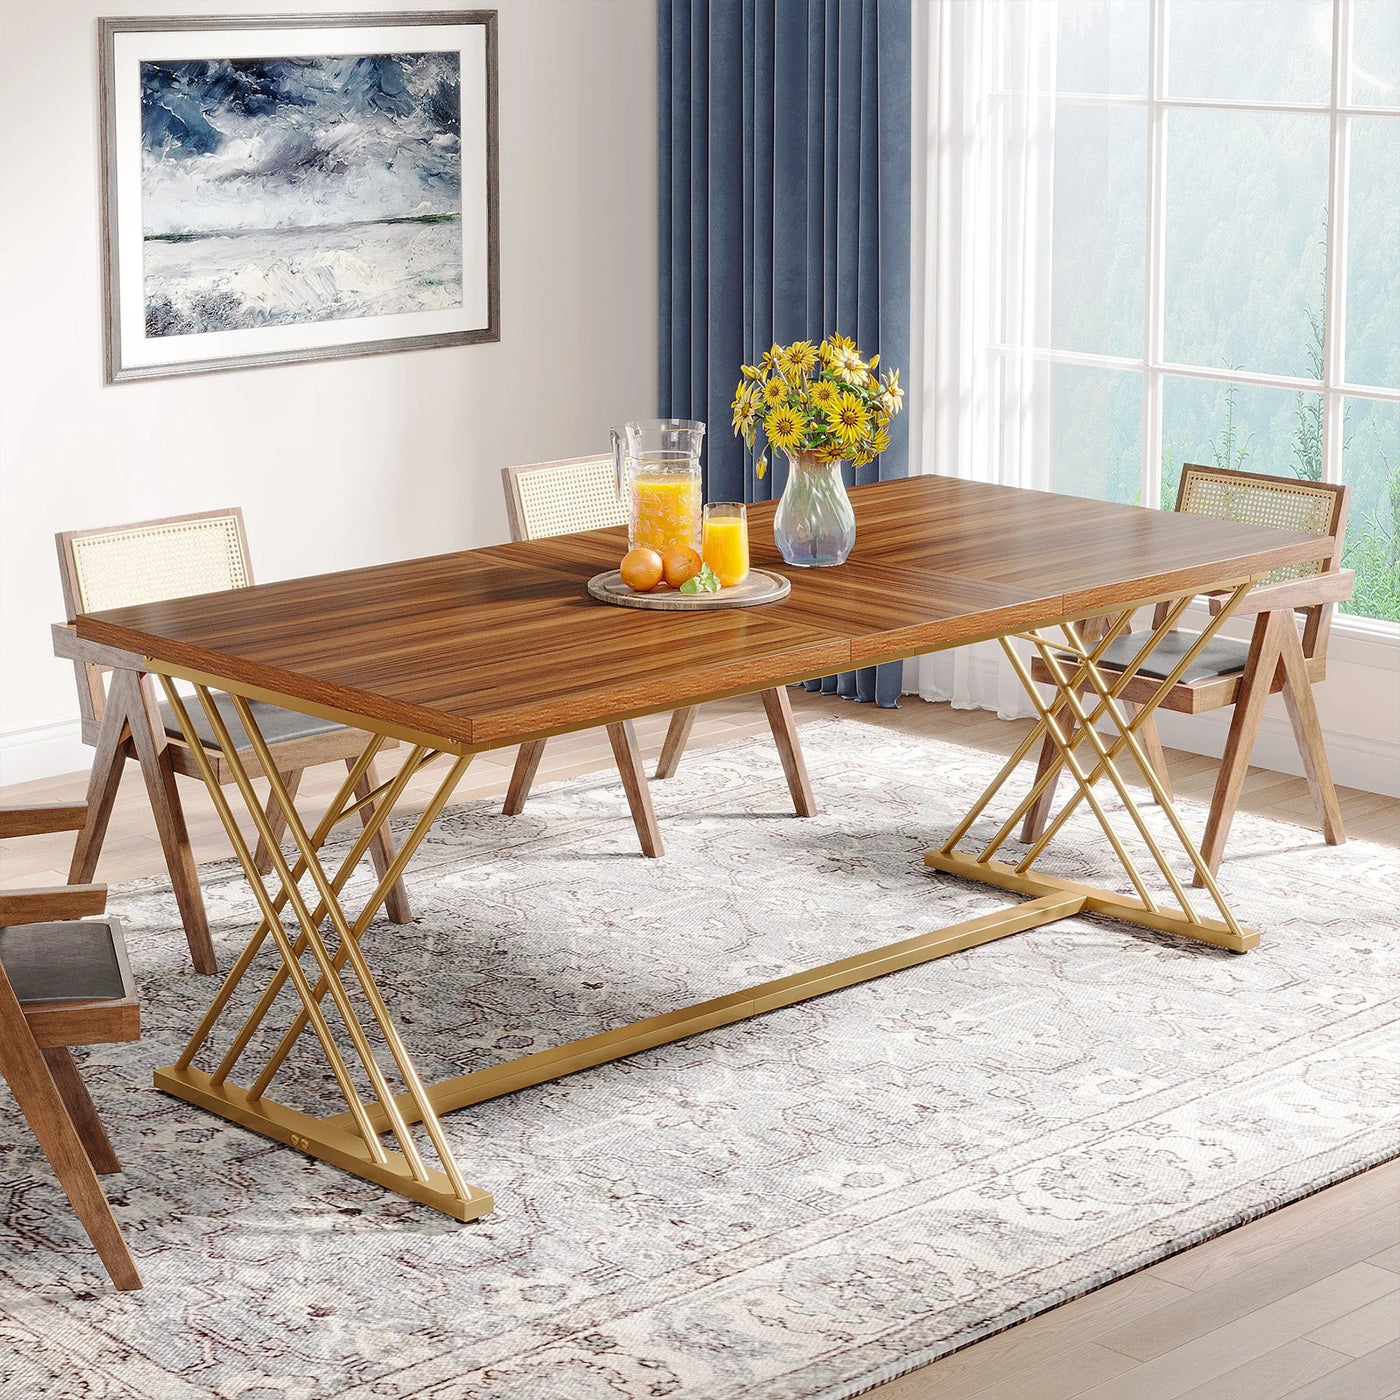 Mesa de comedor Peach de 63 pulgadas, mesa de cocina de madera con marco de metal dorado